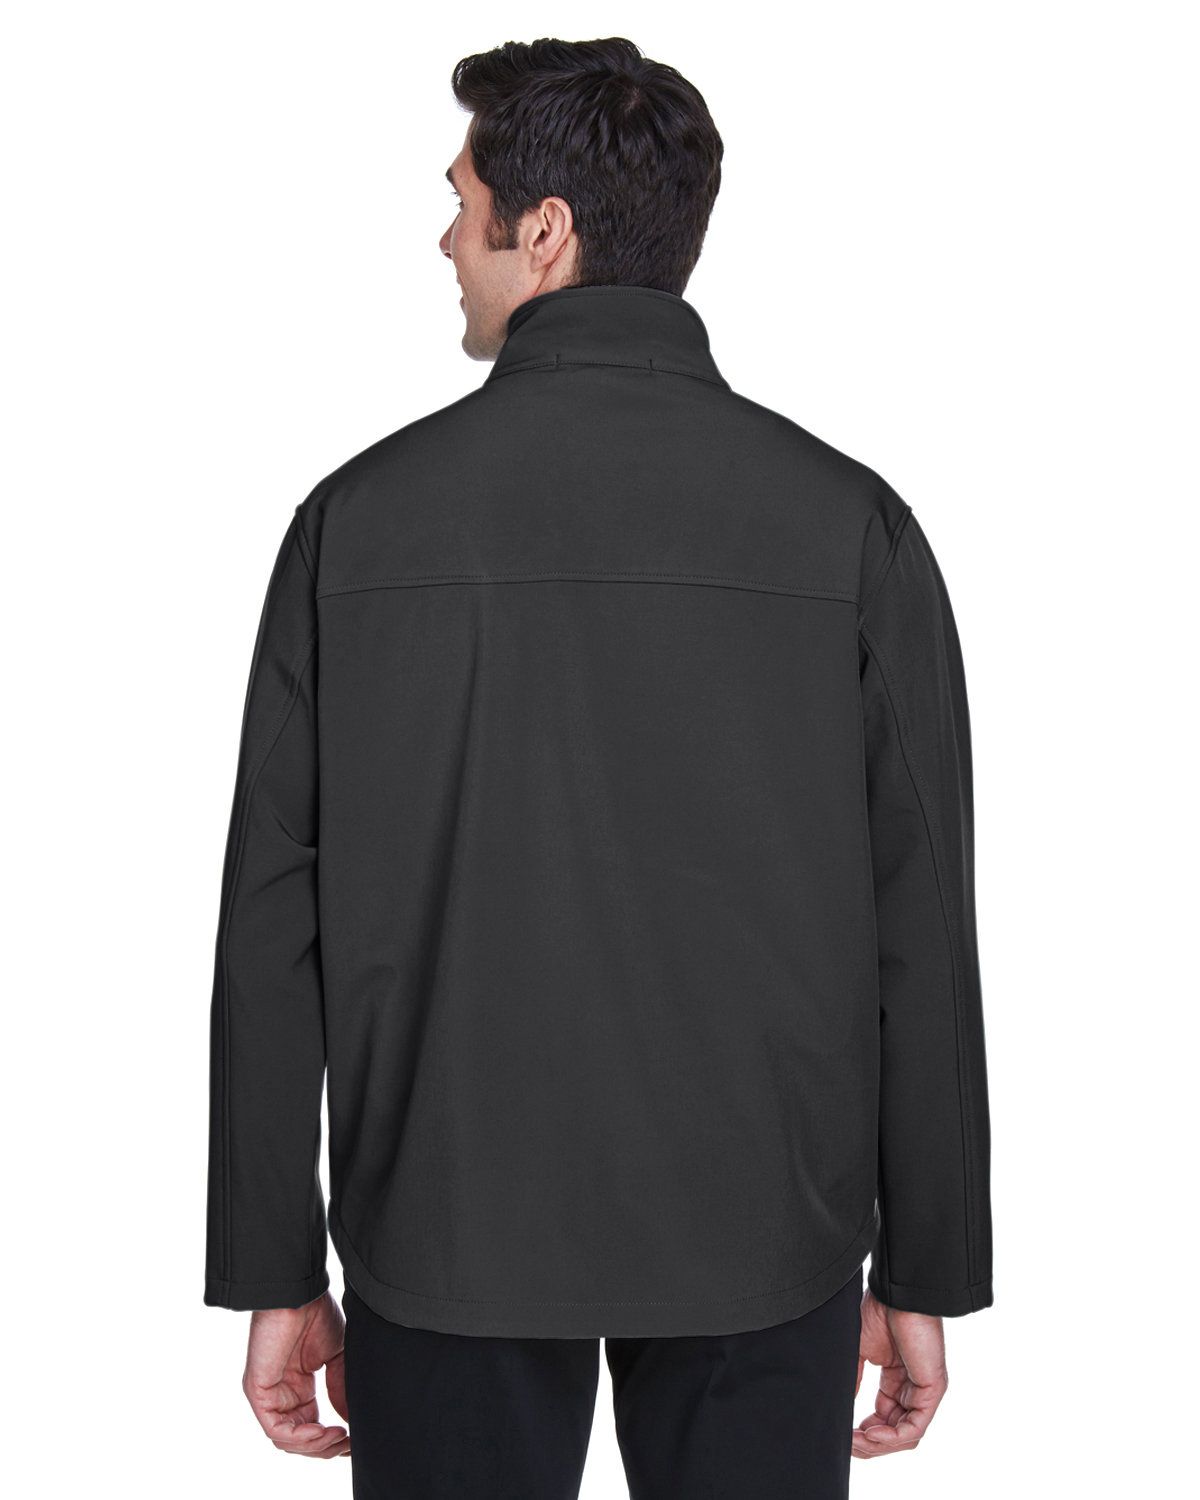 'Devon & Jones D995 Men's Soft Shell Jacket'